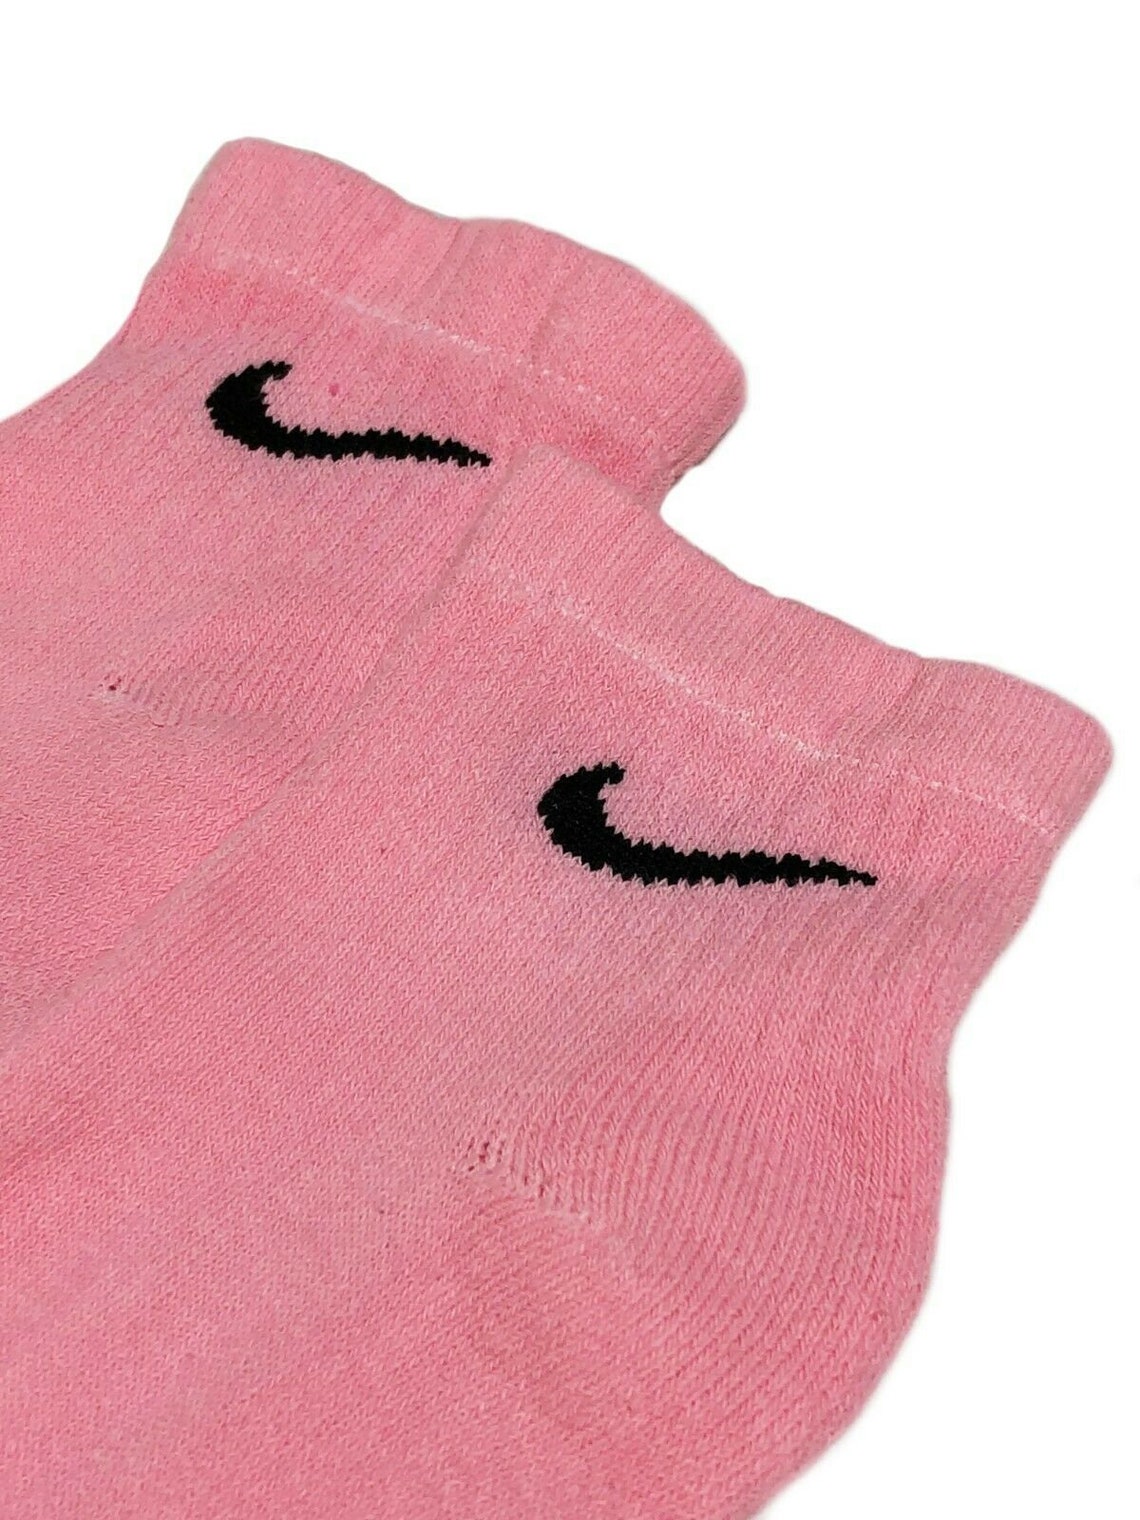 LIGHT PINK ANKLE Official Nike Dyed Socks Hand Crew Socks Tye Dye Nike ...